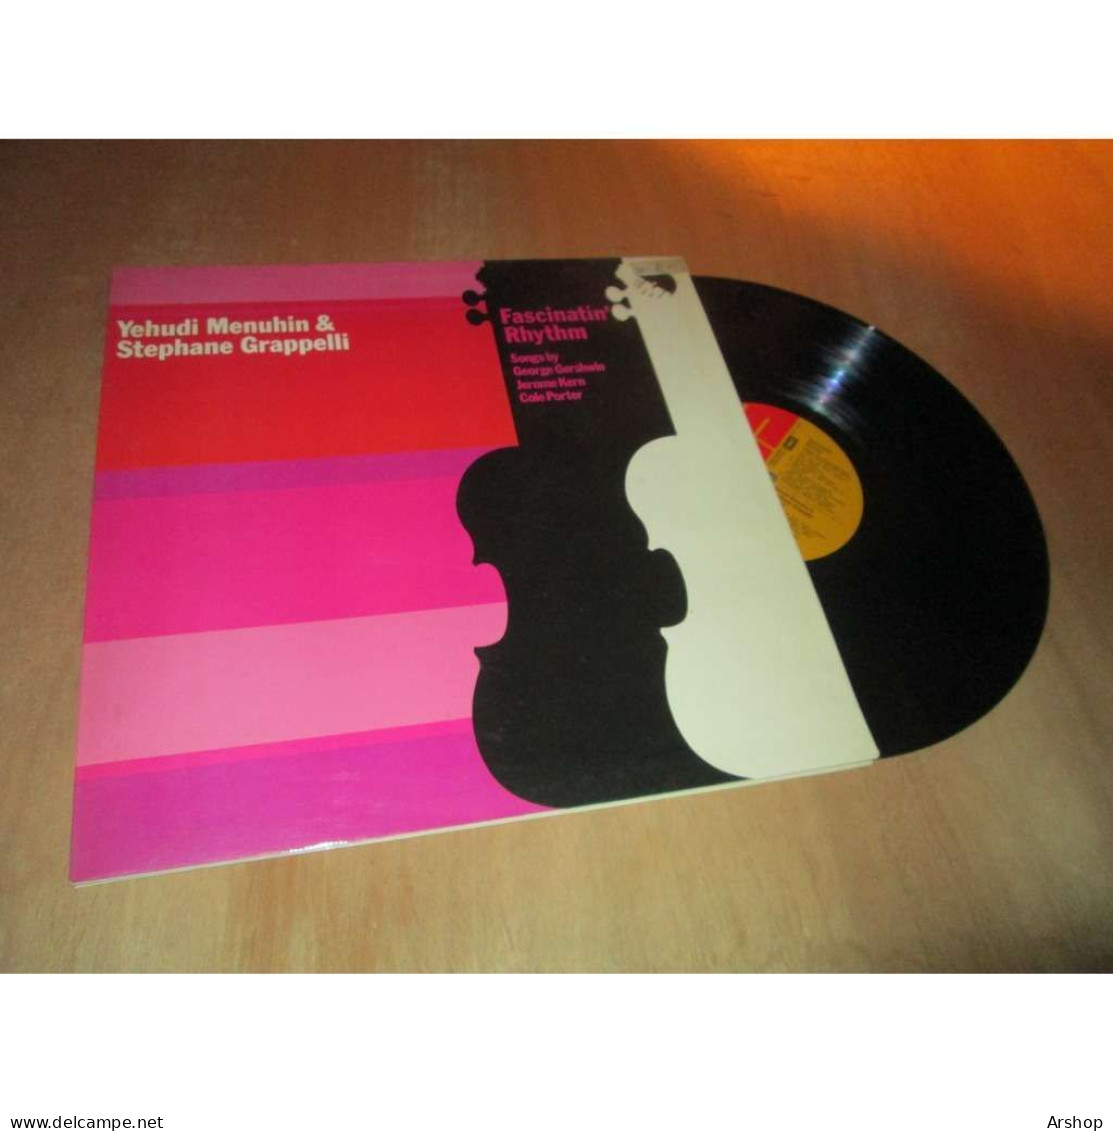 YEHUDI MENUHIN & STEPHANE GRAPPELLI Fascinatin' Rhythm EMI EMD 5523 UK Lp 1975 - Jazz